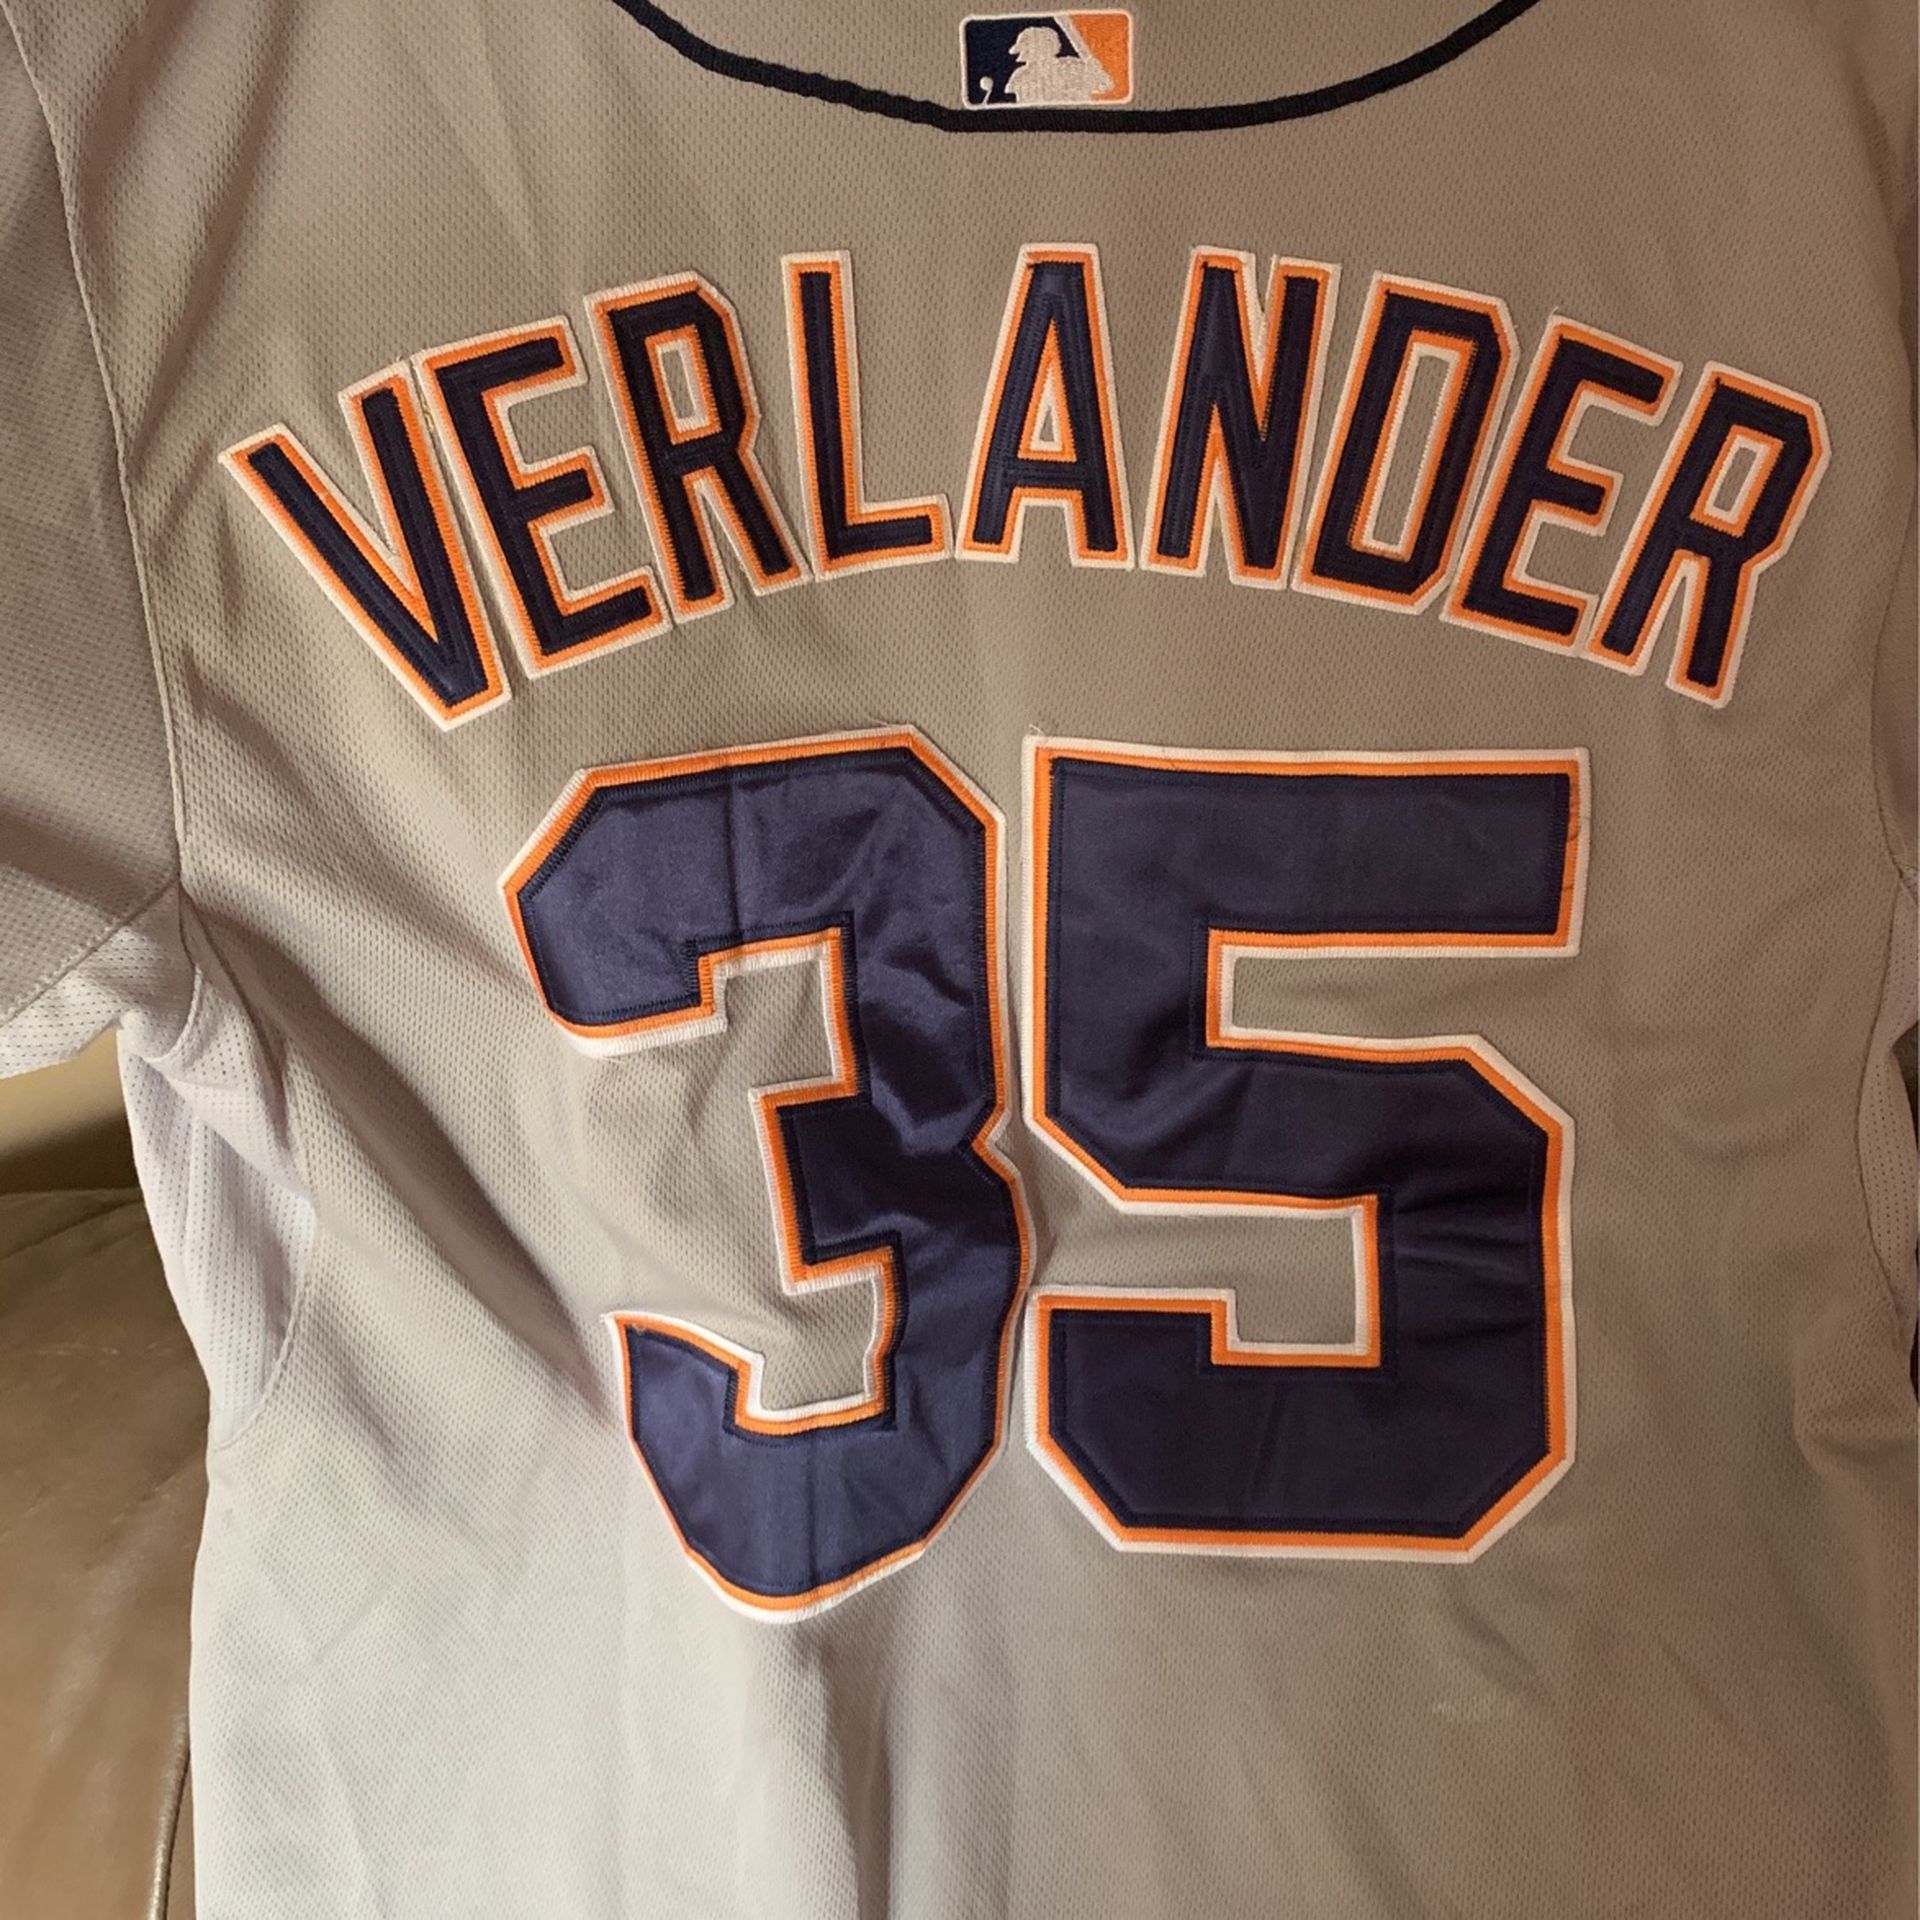 Verlander Detroit Tigers Size 48 jersey